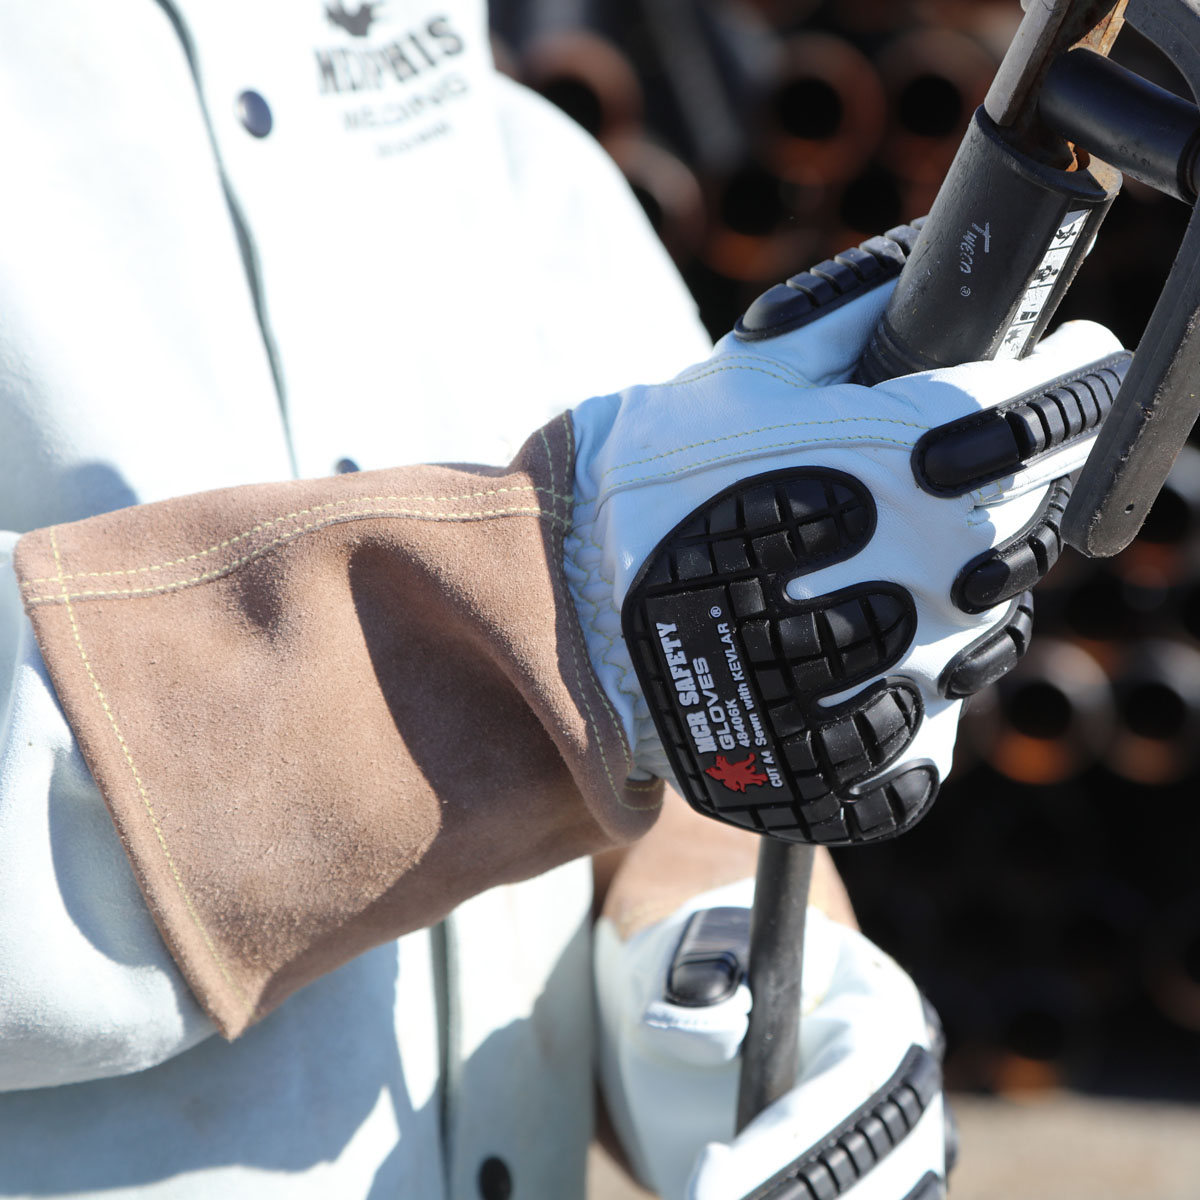 48406K - Grain Goatskin Kevlar® Lined Mig Tig Welding Glove